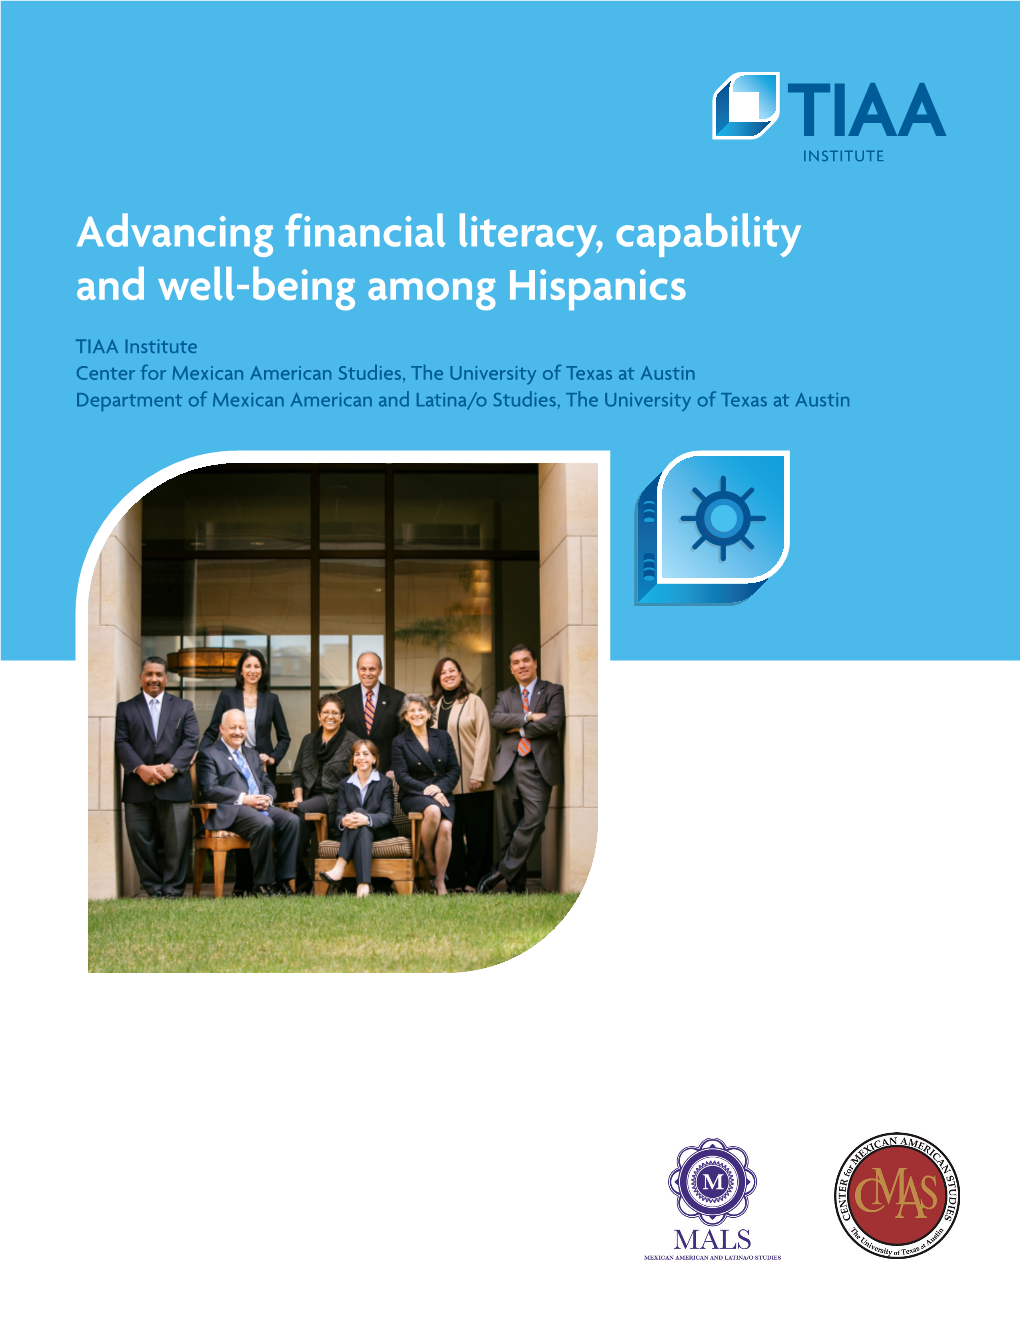 Advancing Financial Literacy, Capability and Well-Being Among Hispanics